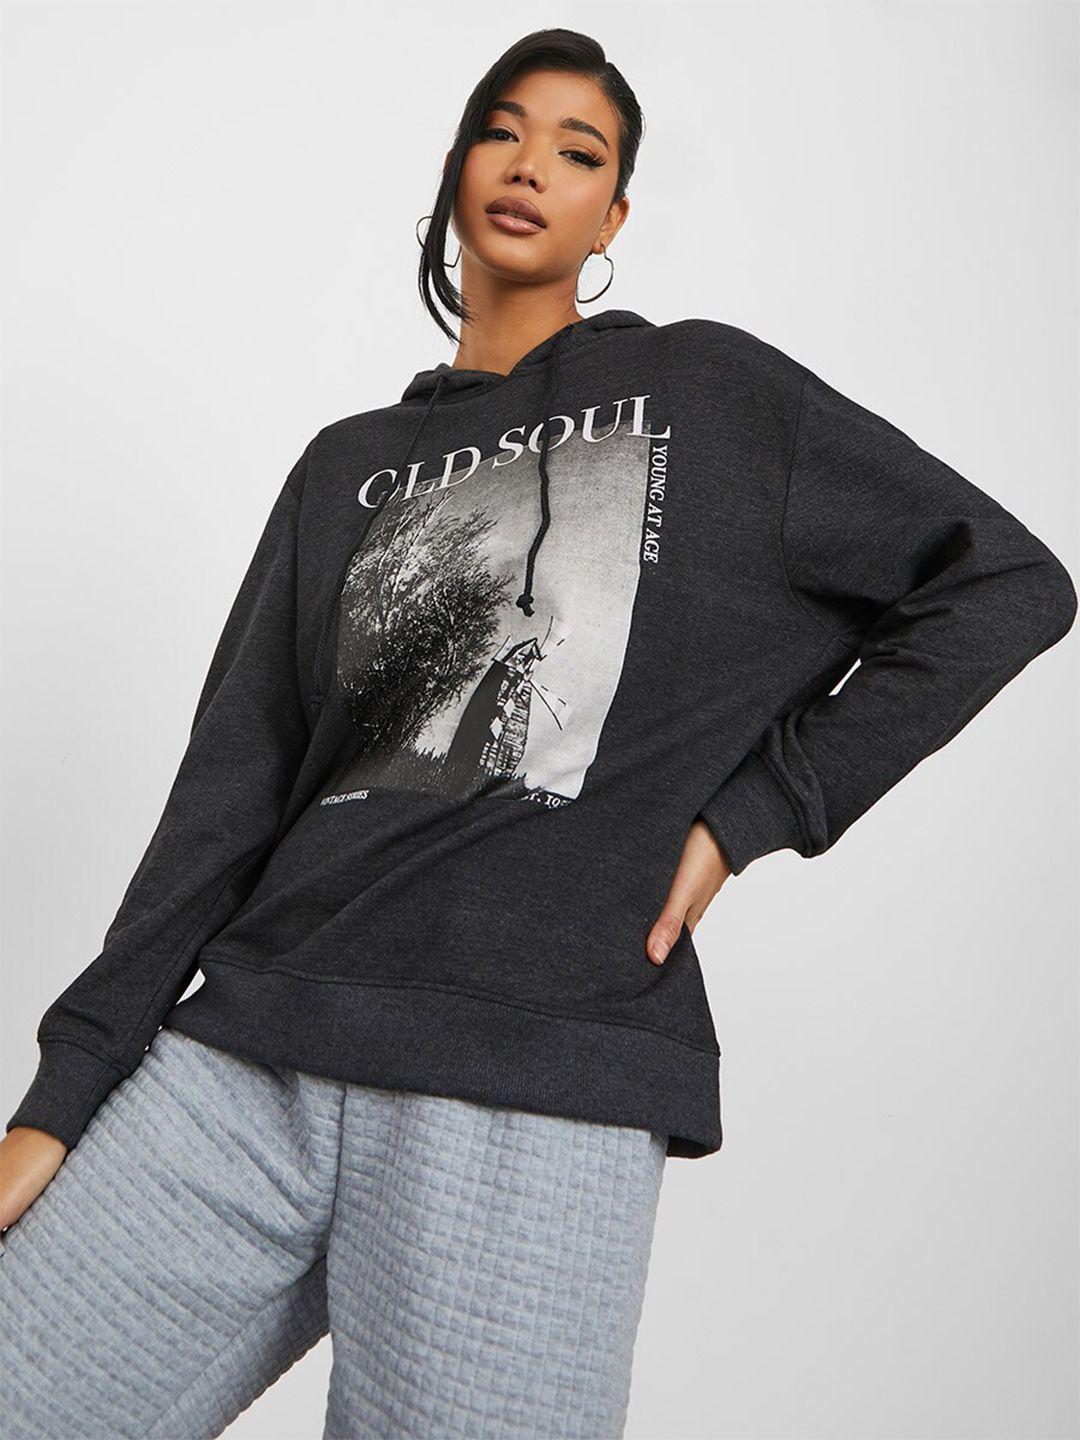 styli-graphic-printed-hooded-cotton-sweatshirt